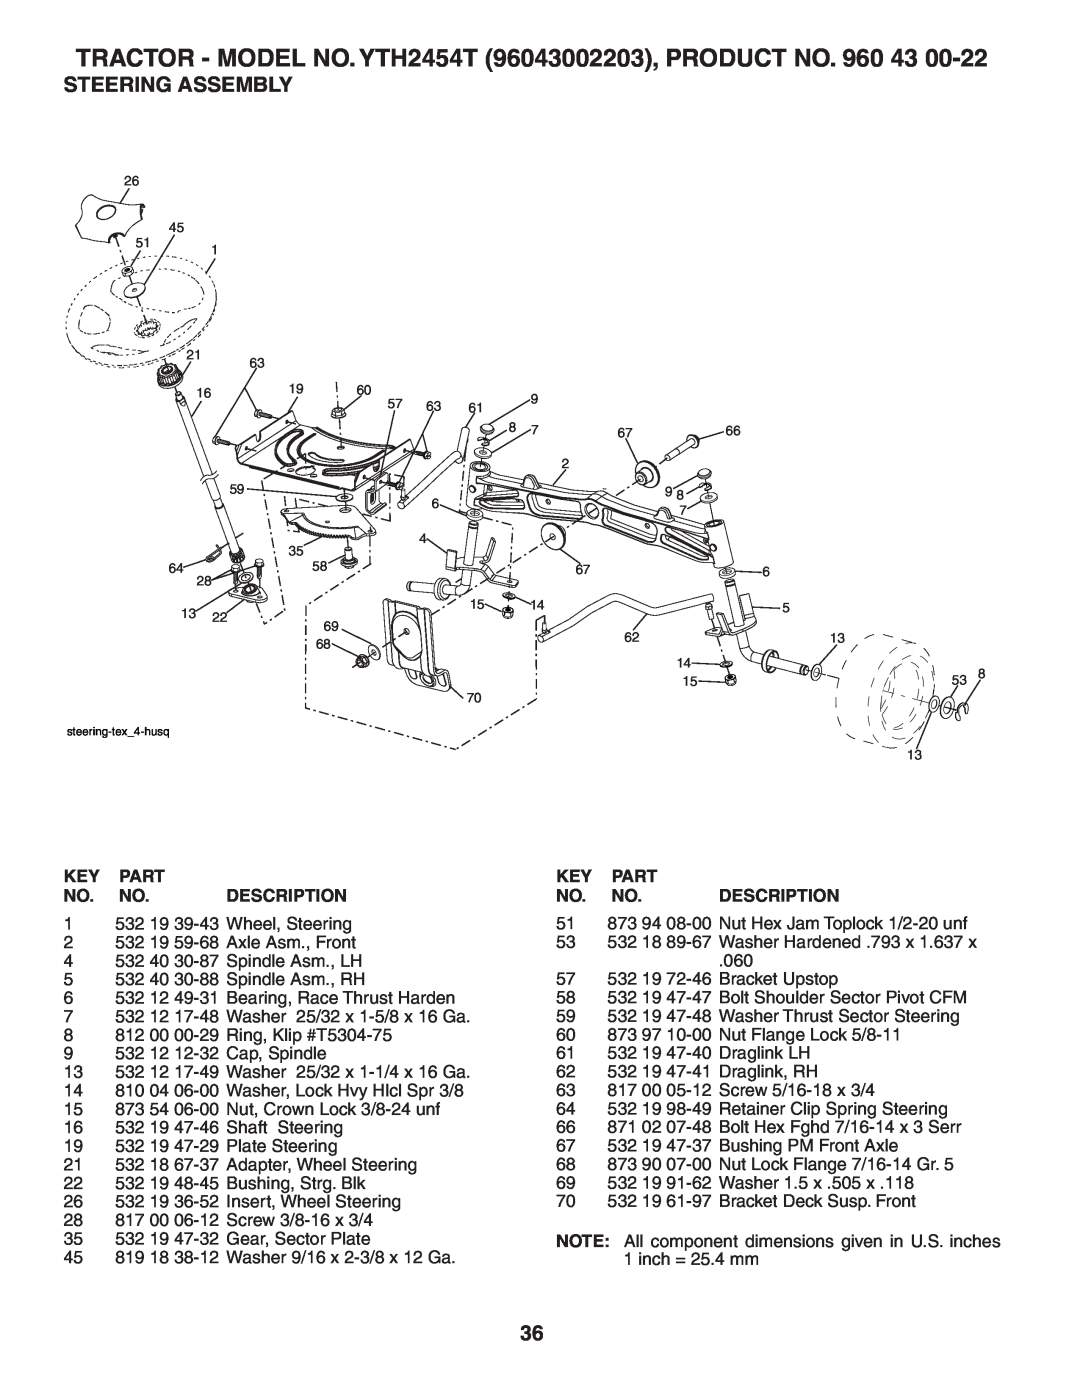 Husqvarna YTH2454T owner manual Steering Assembly, Part, Description 